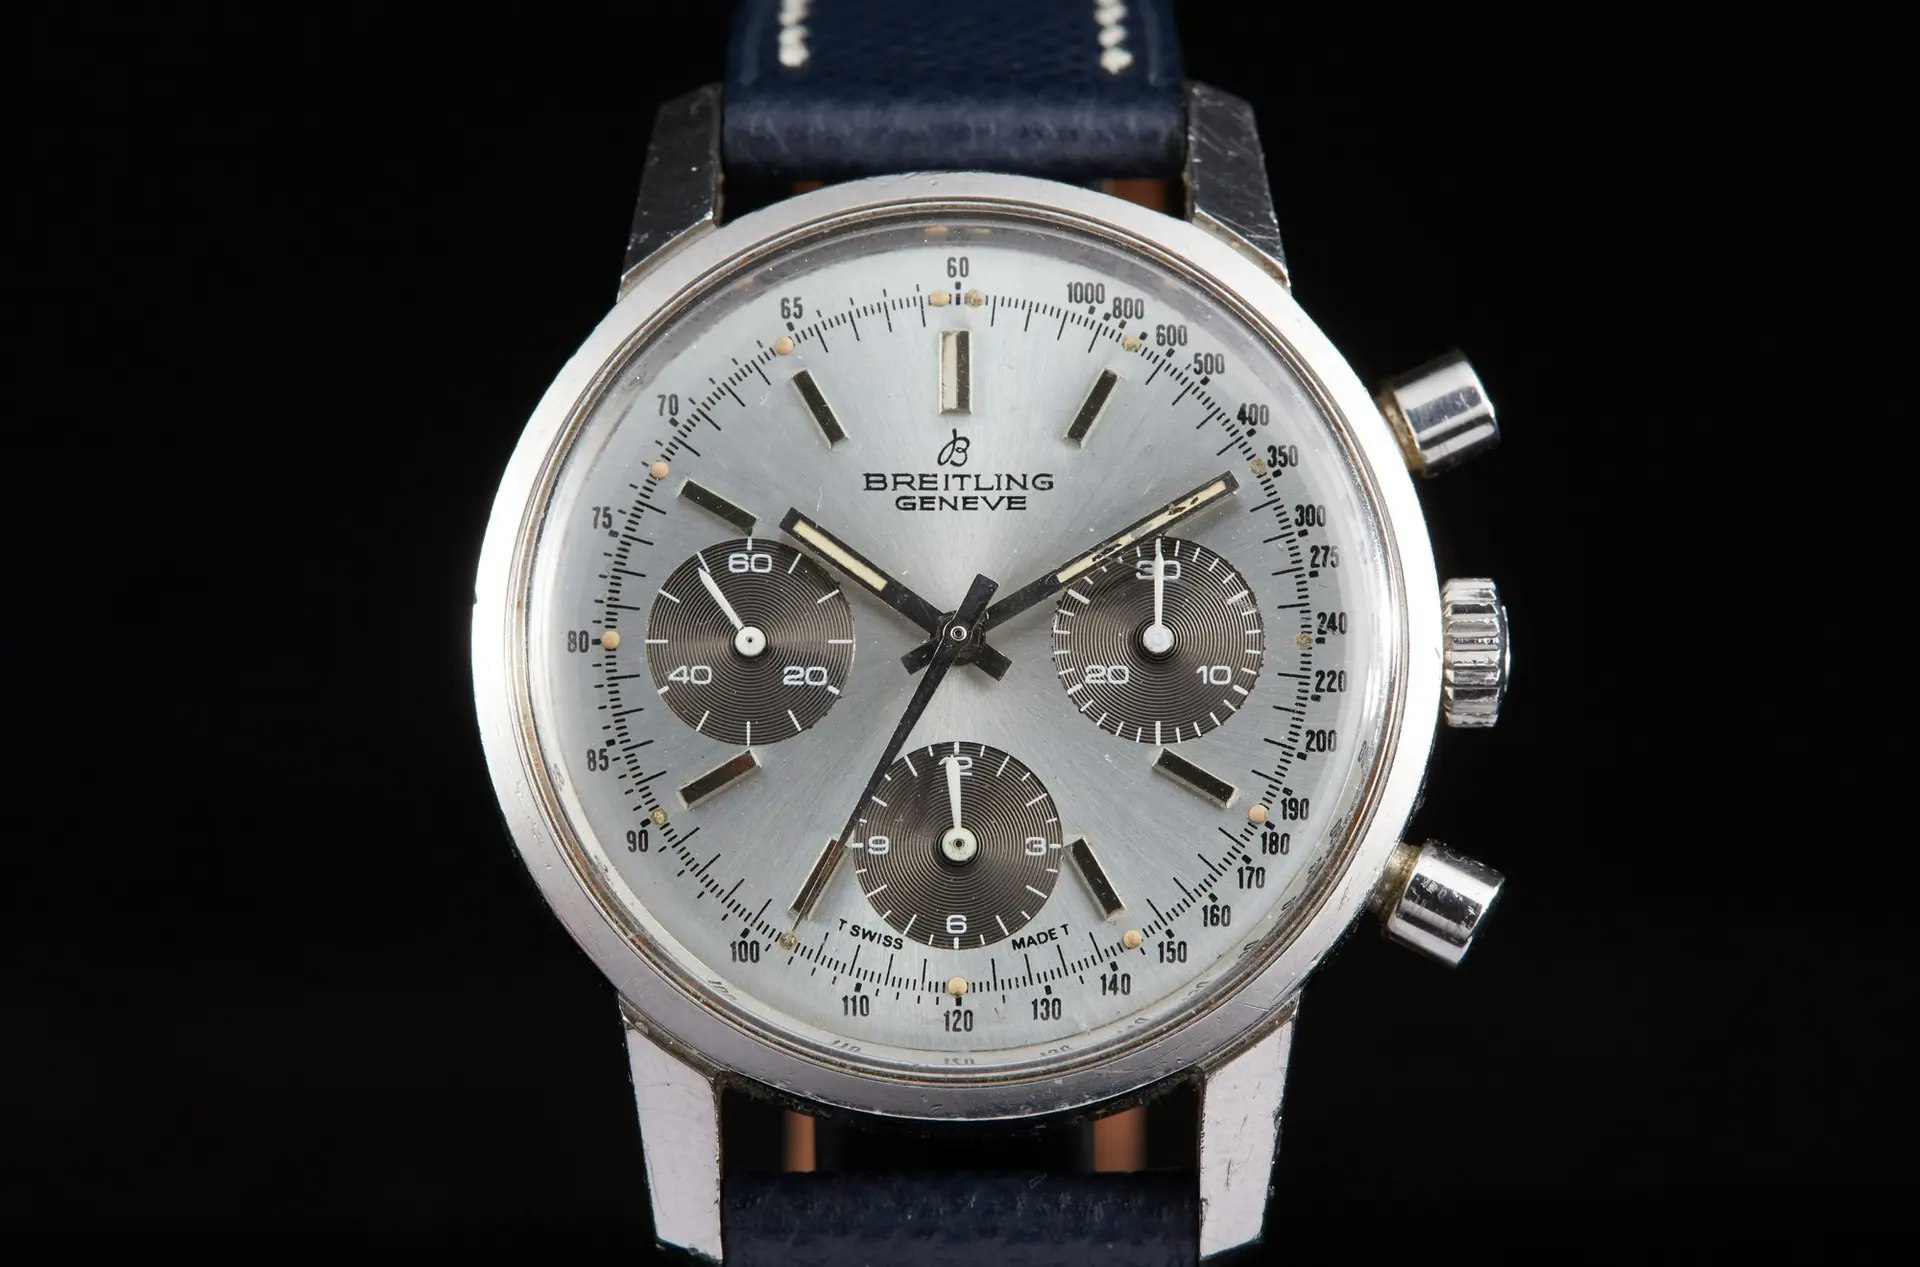 Thumbnail for Breitling 815 Chronograph #WatchFamforUkraine